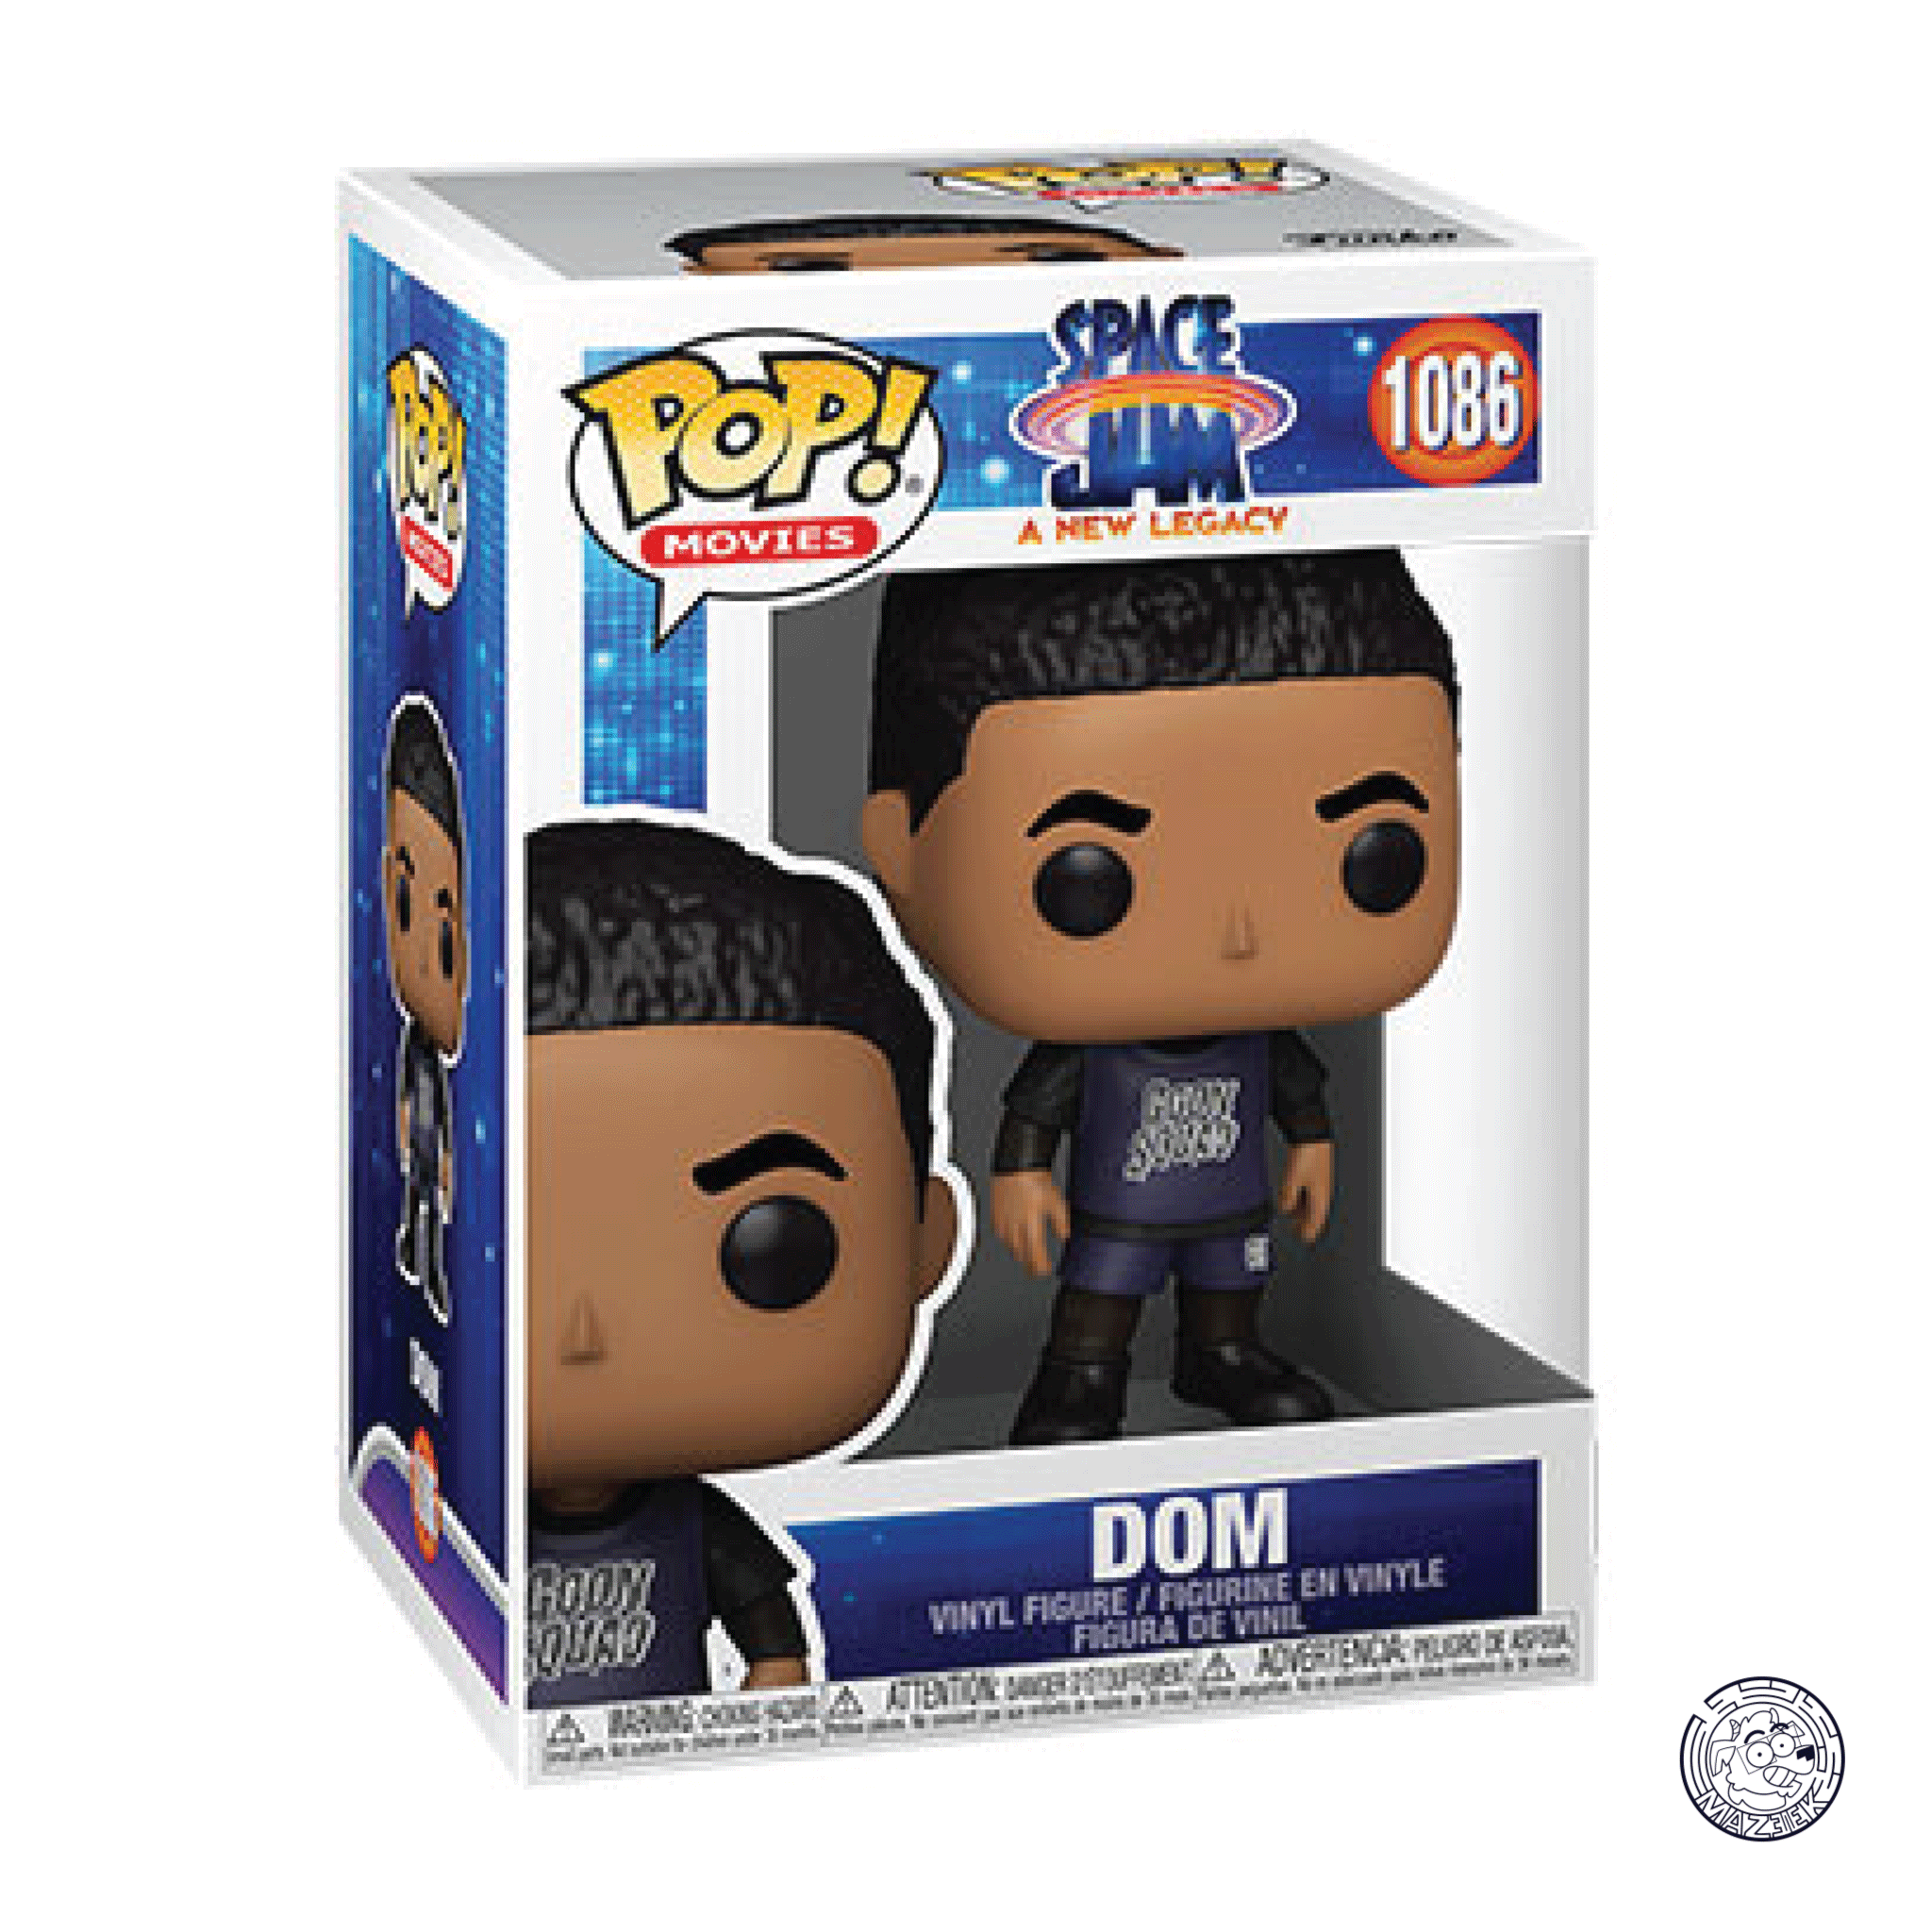 Funko POP! Space Jam a new Legacy: Dom 1086